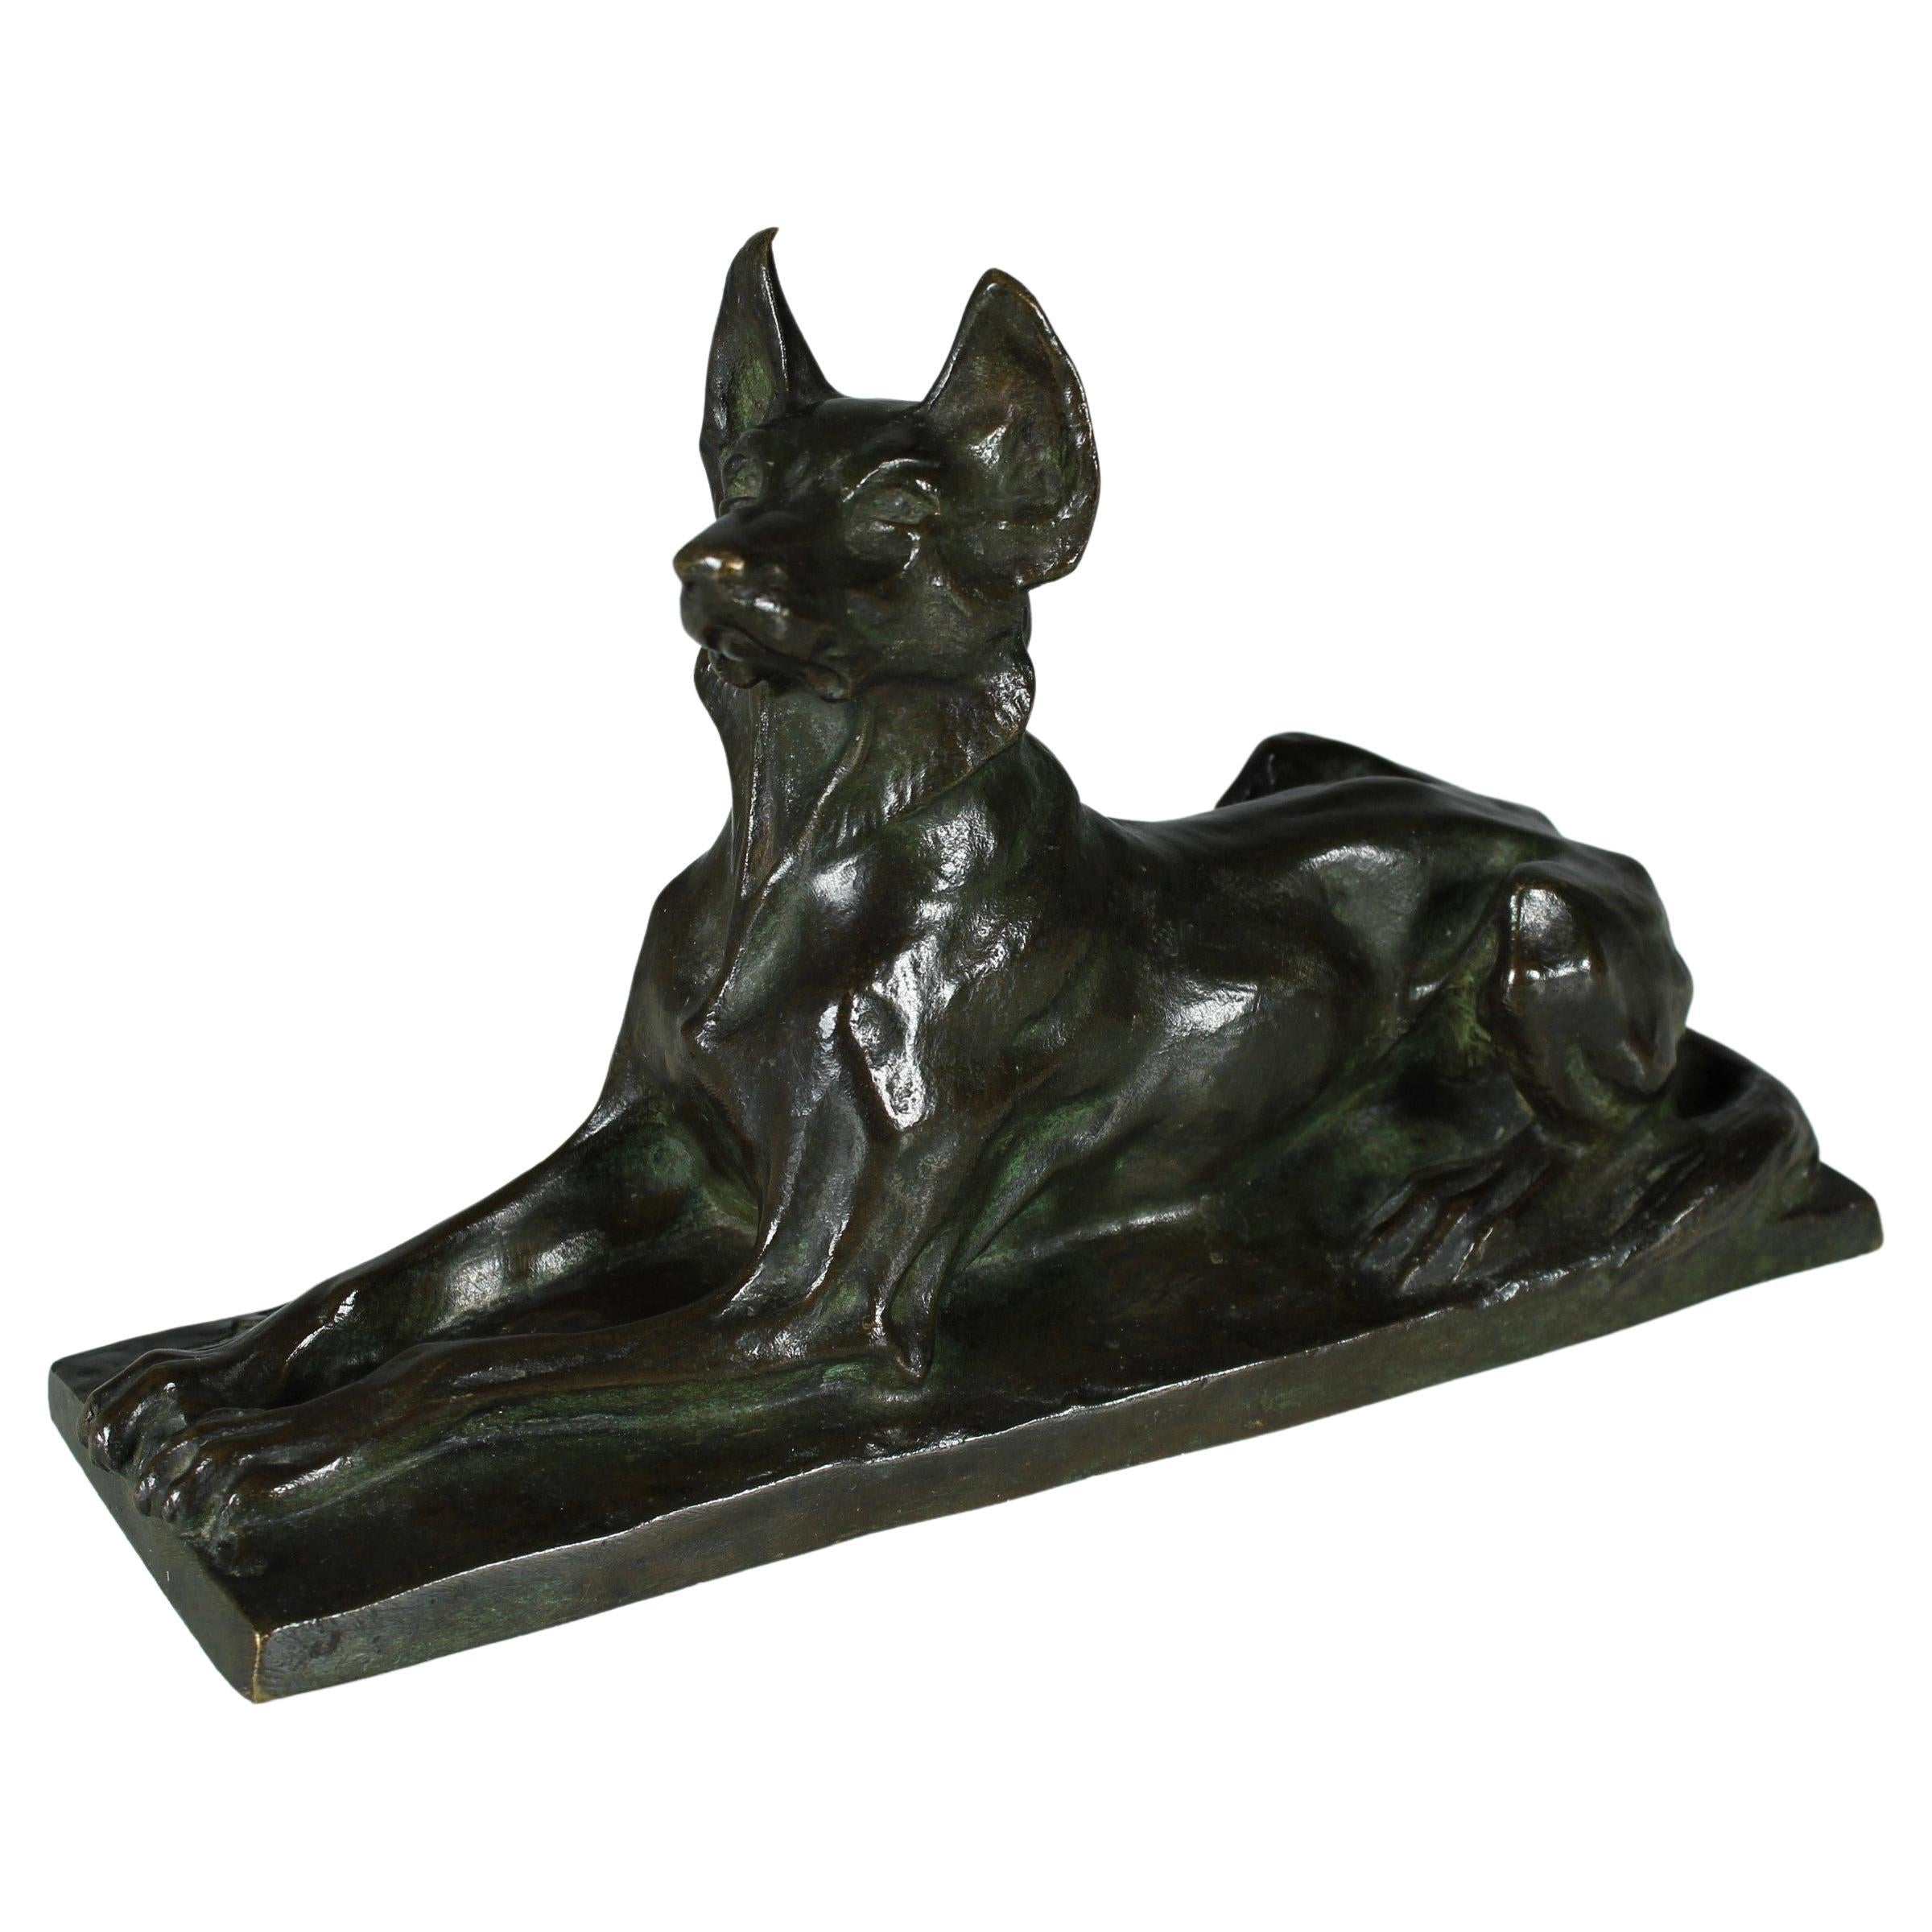 Antique Shepherd Dog Sculpture, Signed by Artist "Ch. Virion", Bronze Patinated